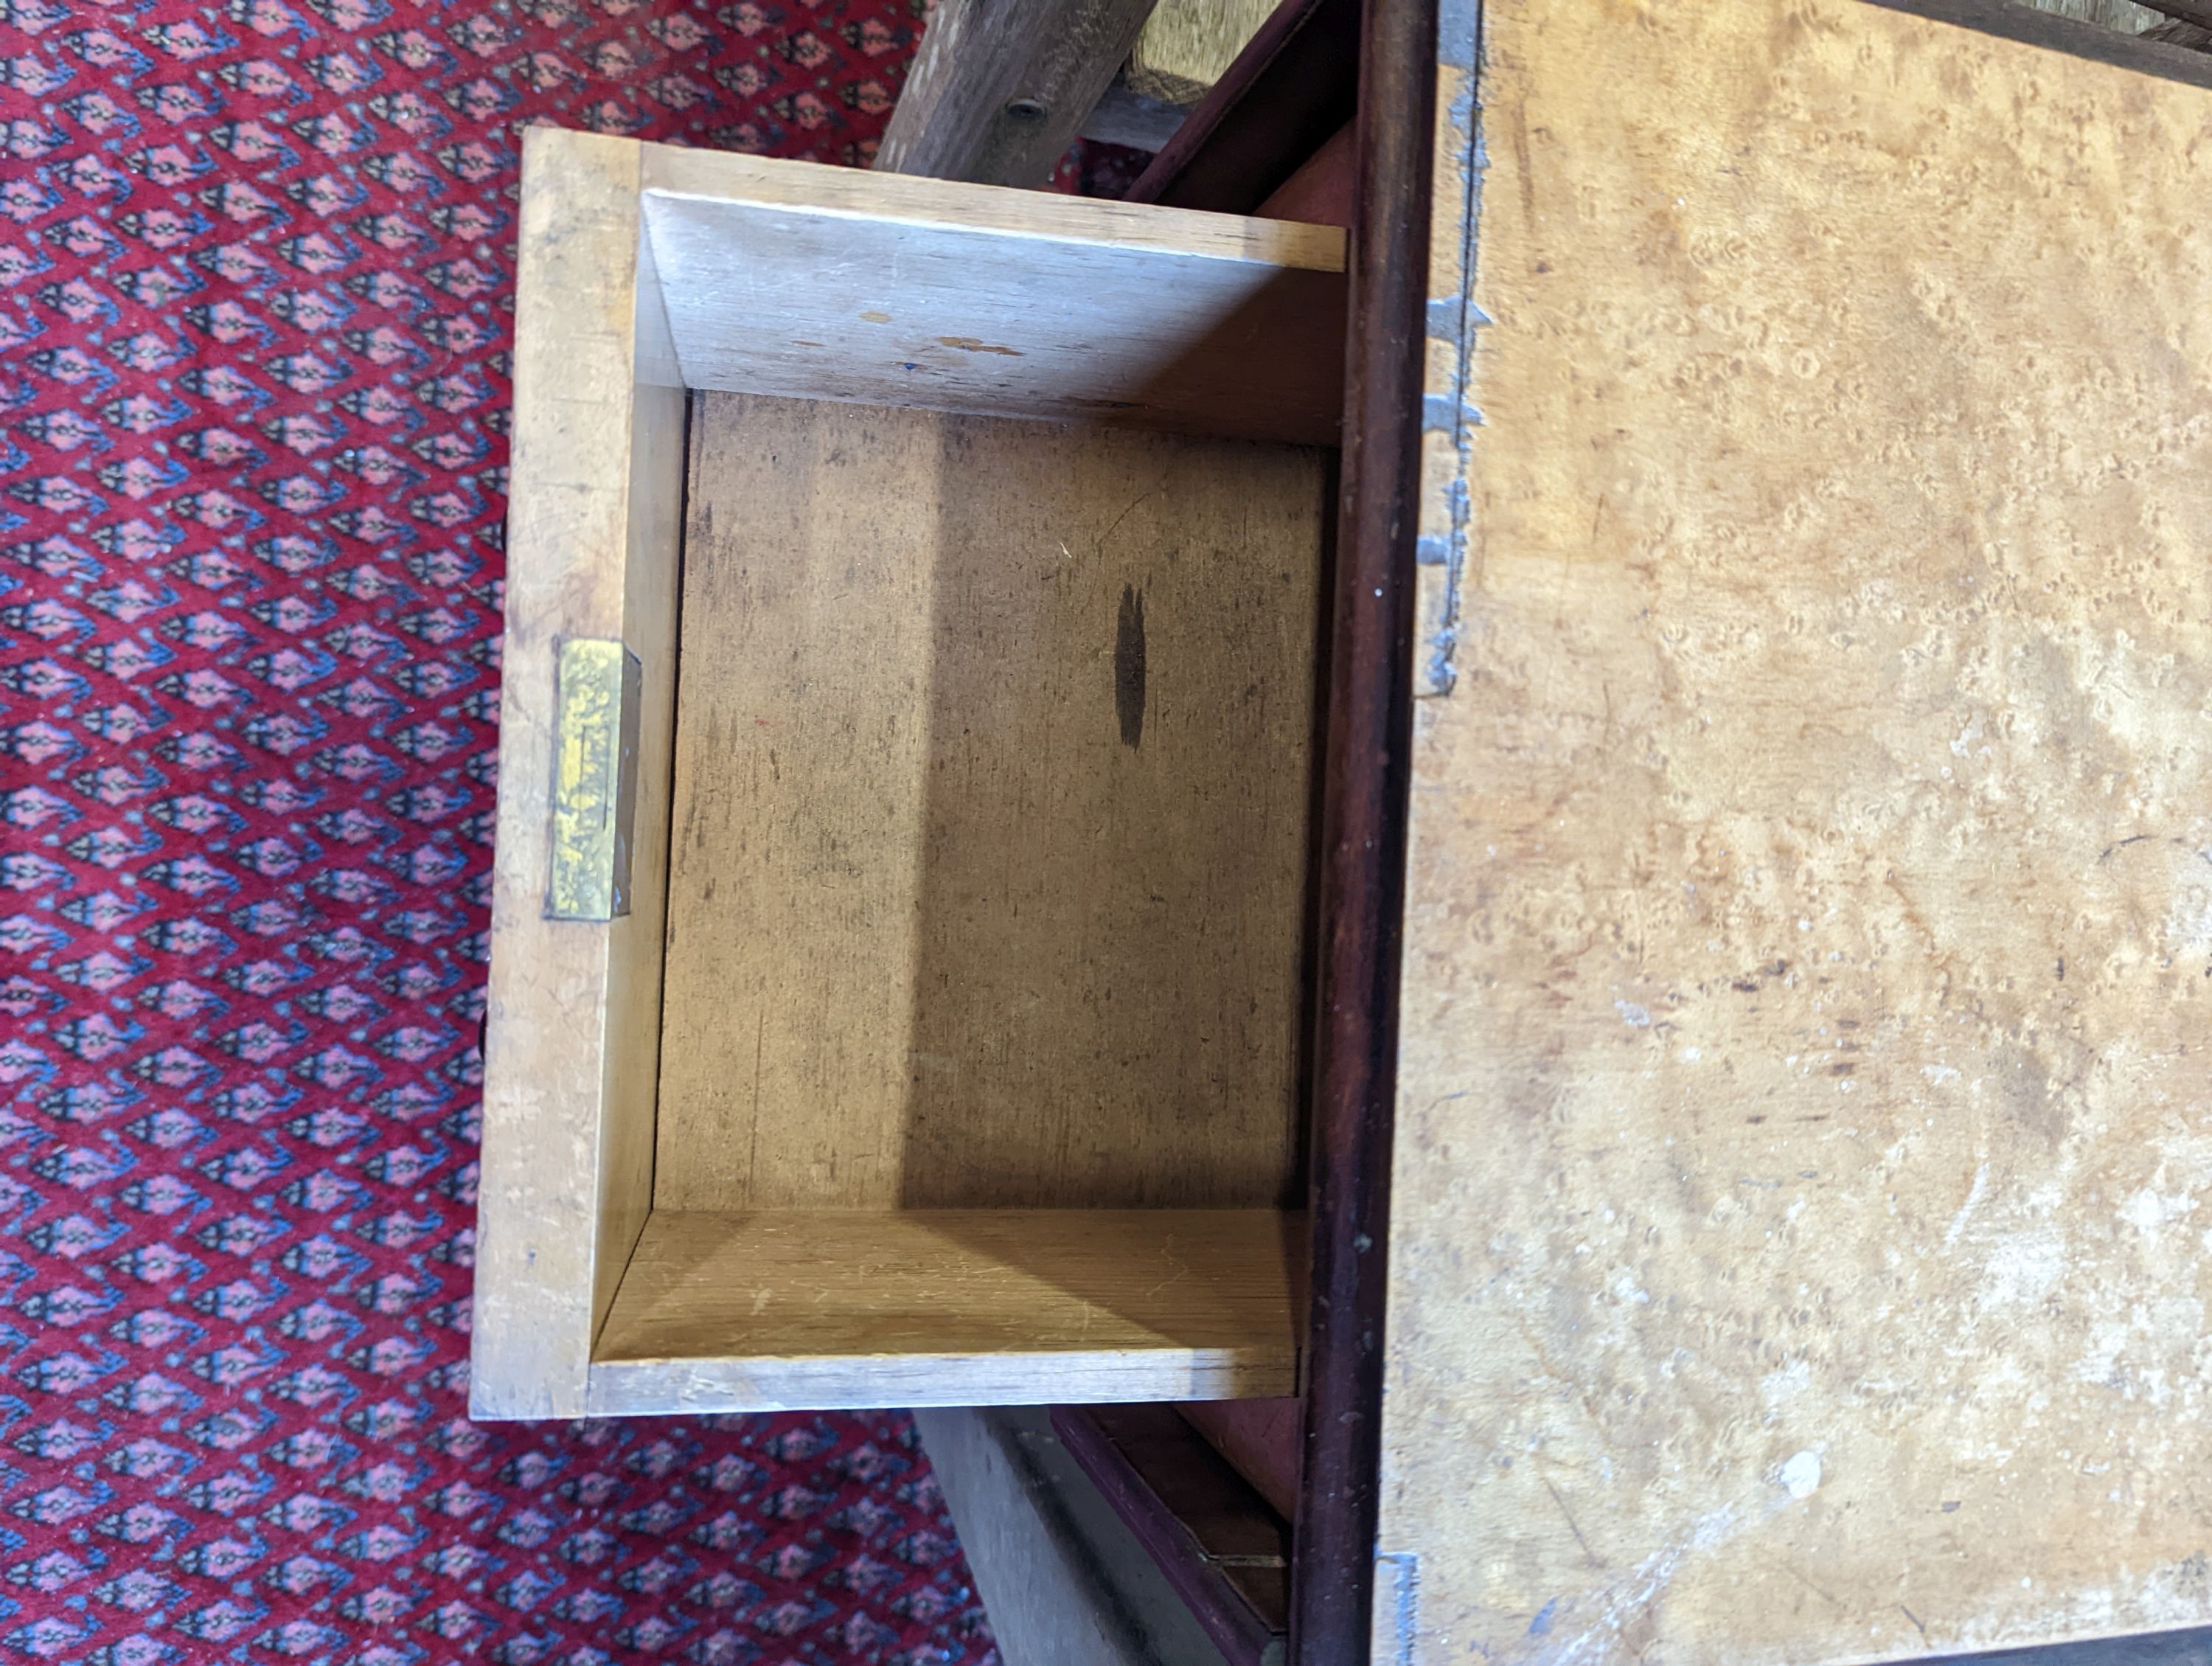 A 19th century Continental bird's eye maple drop flap work table, width 38cm, depth 53cm, height 74cm